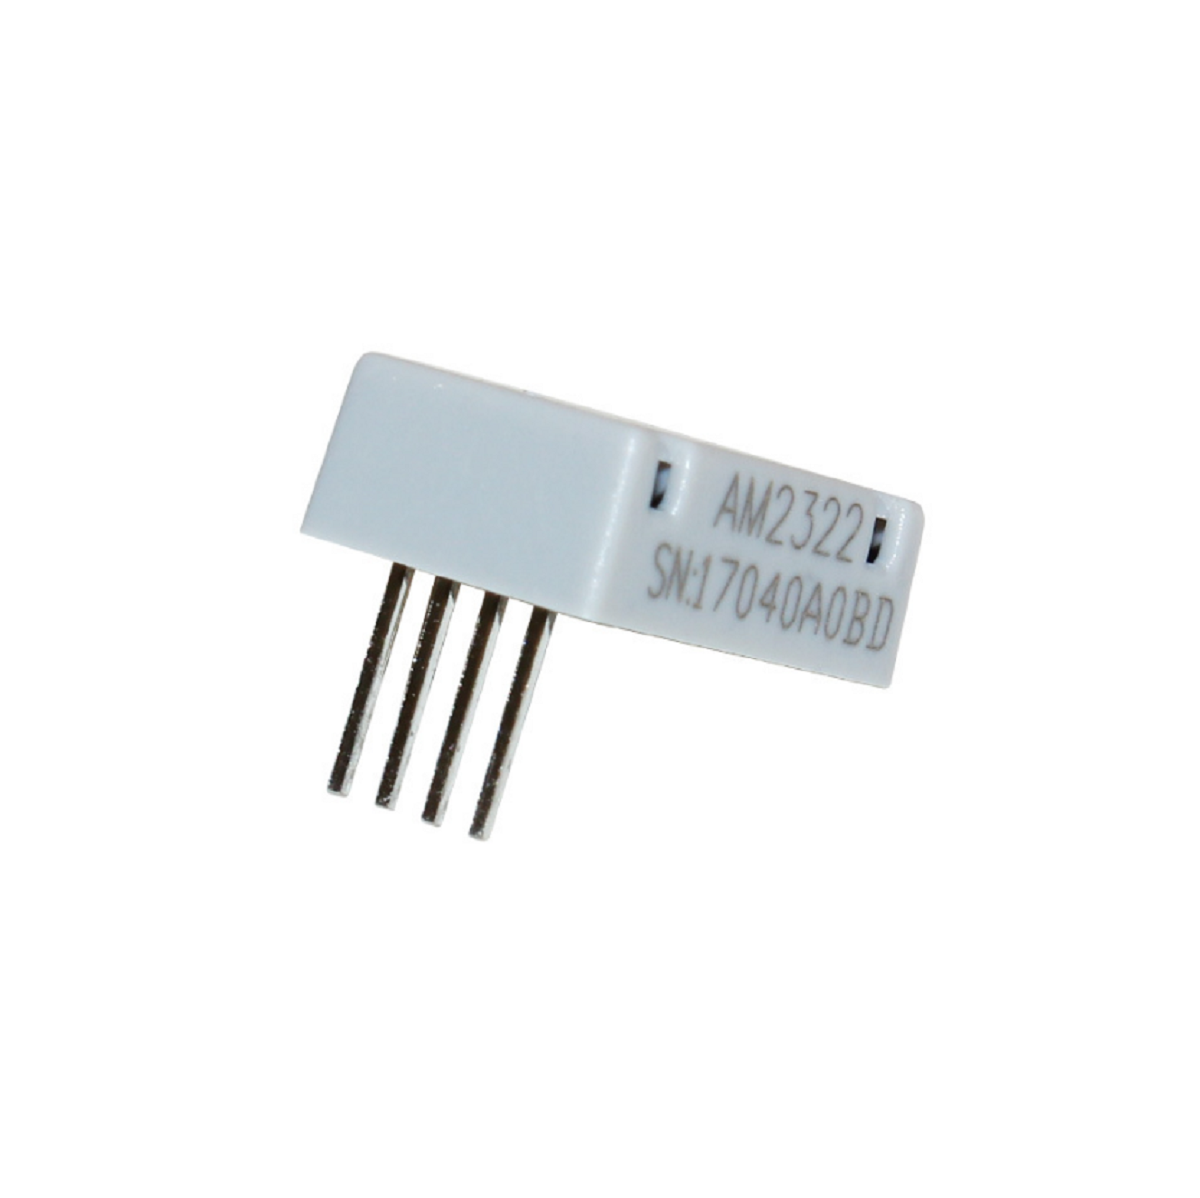 AM2322-Digital-Temperature-and-Humidity-Sensor-Module-High-Precision-Single-Bus-Humidity-Sensor-Capa-1557307-2